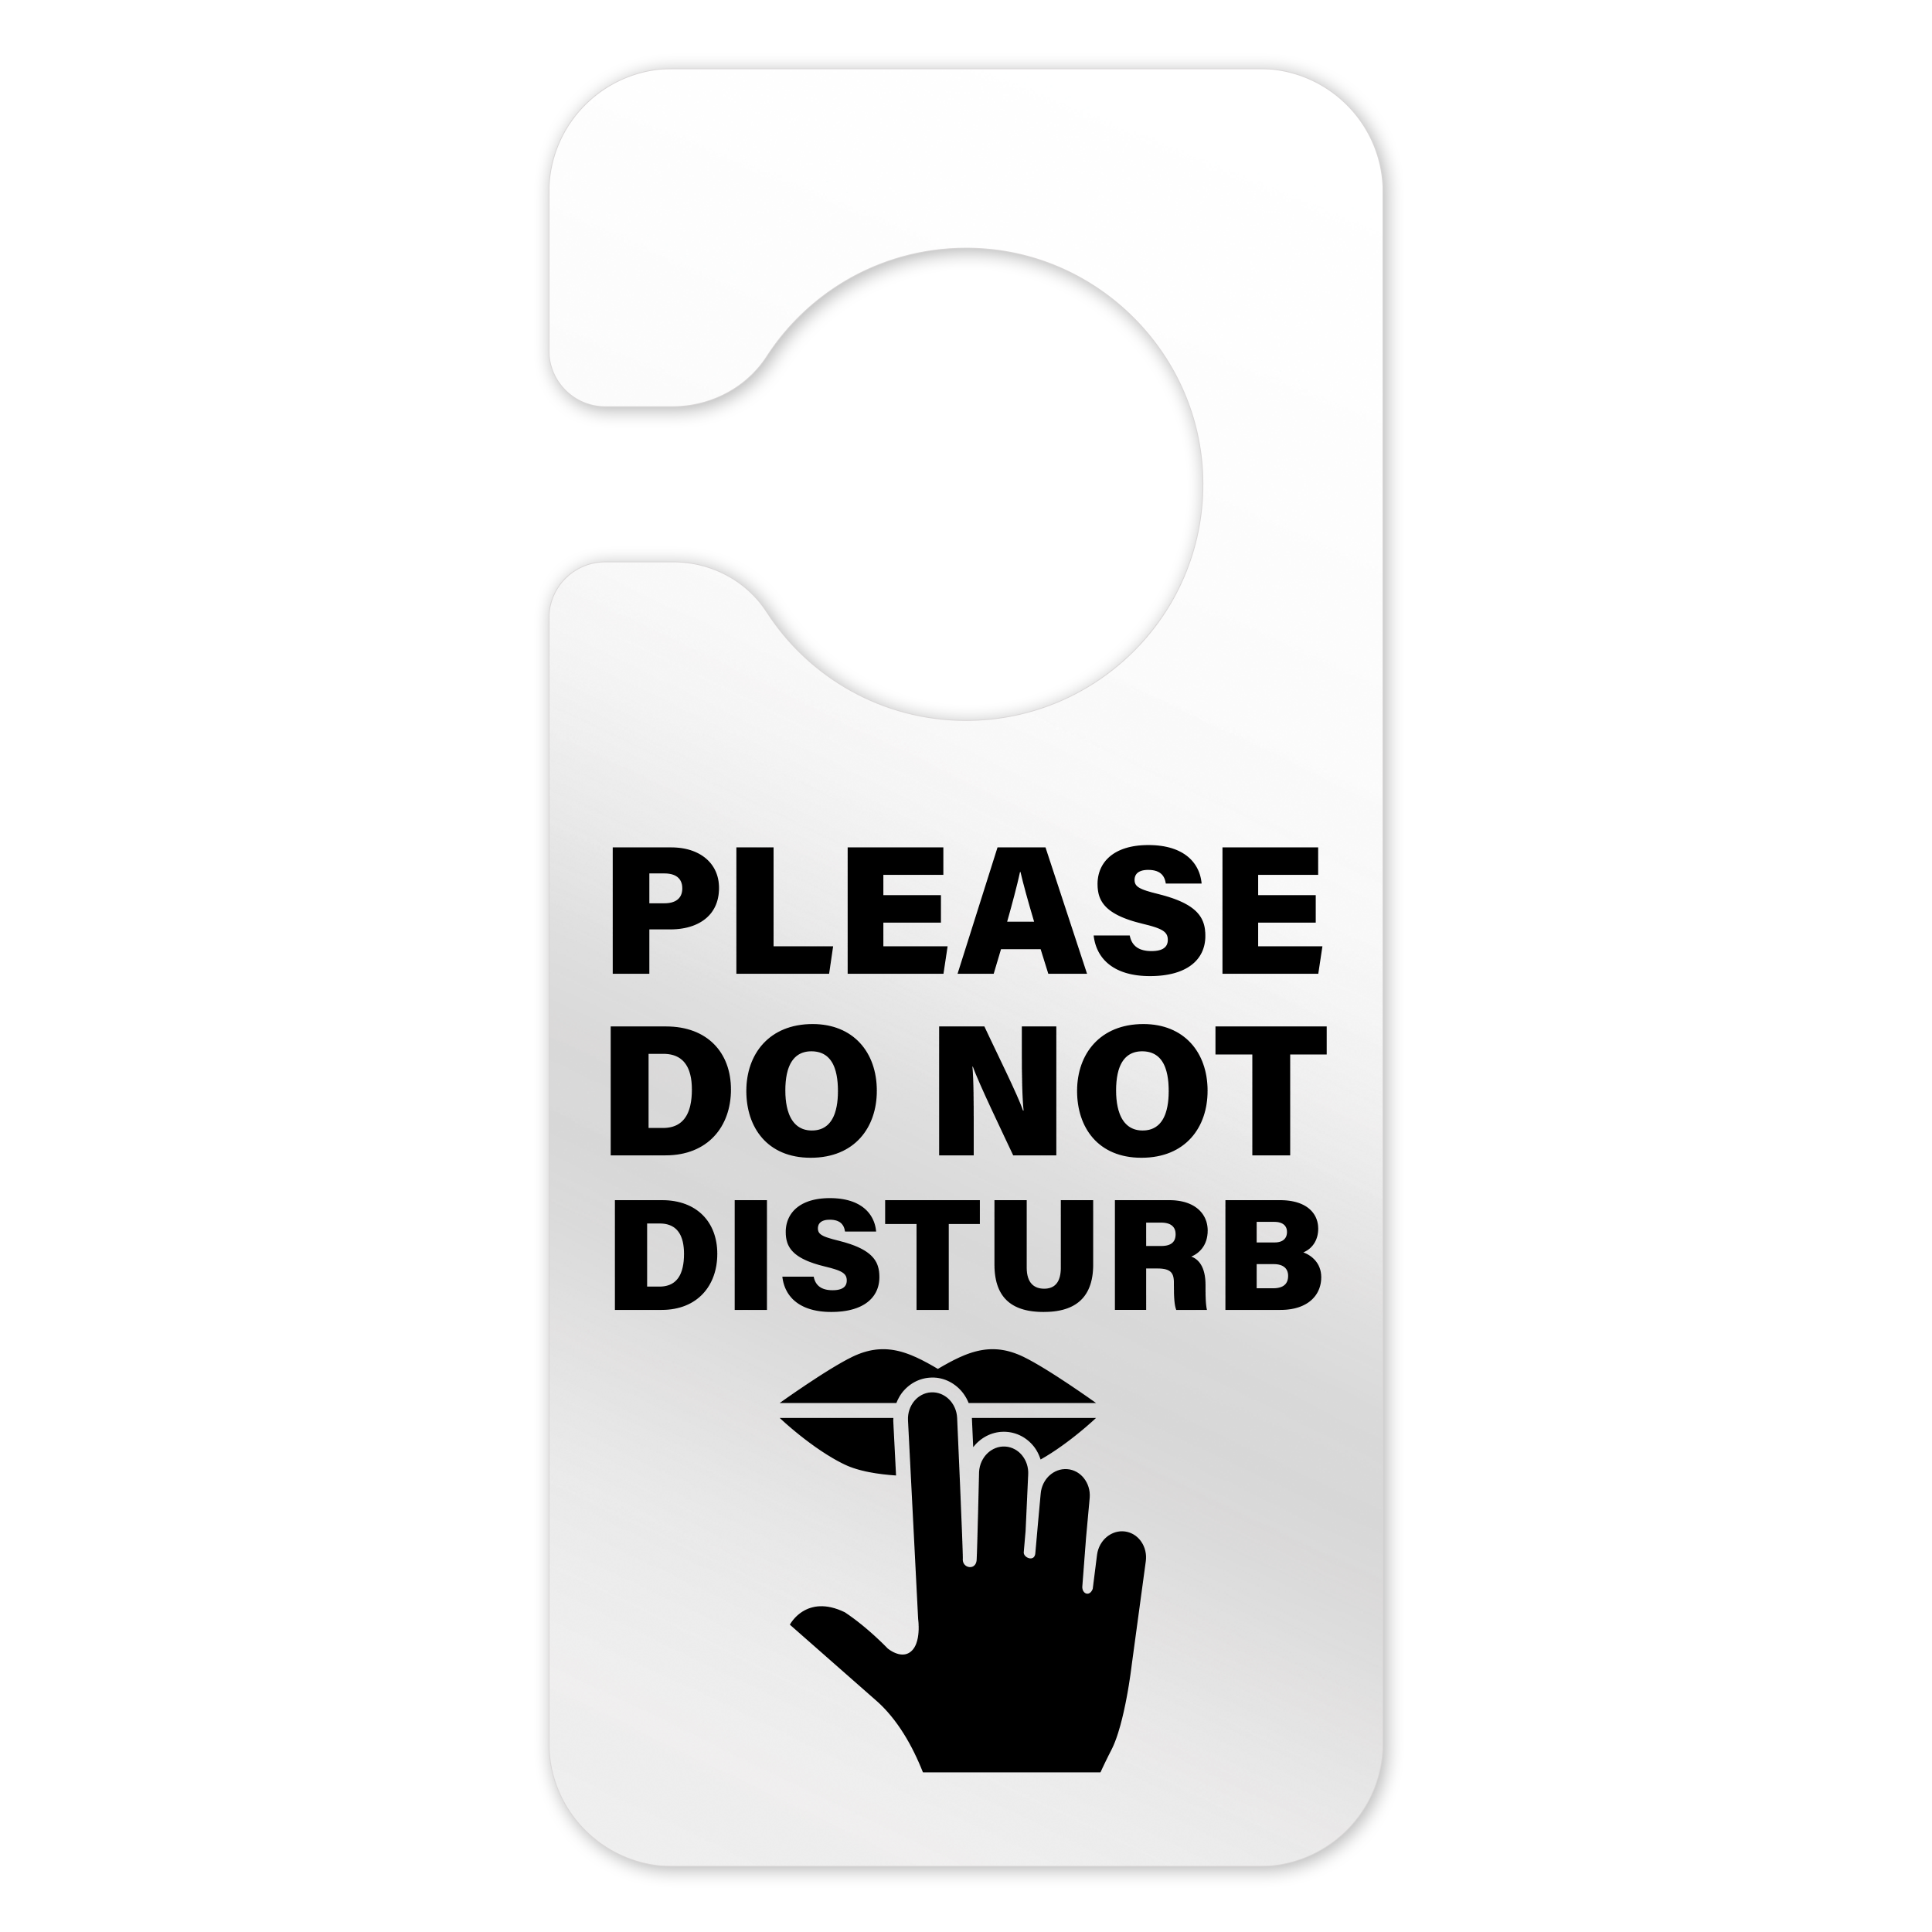 do not disturb 🤍